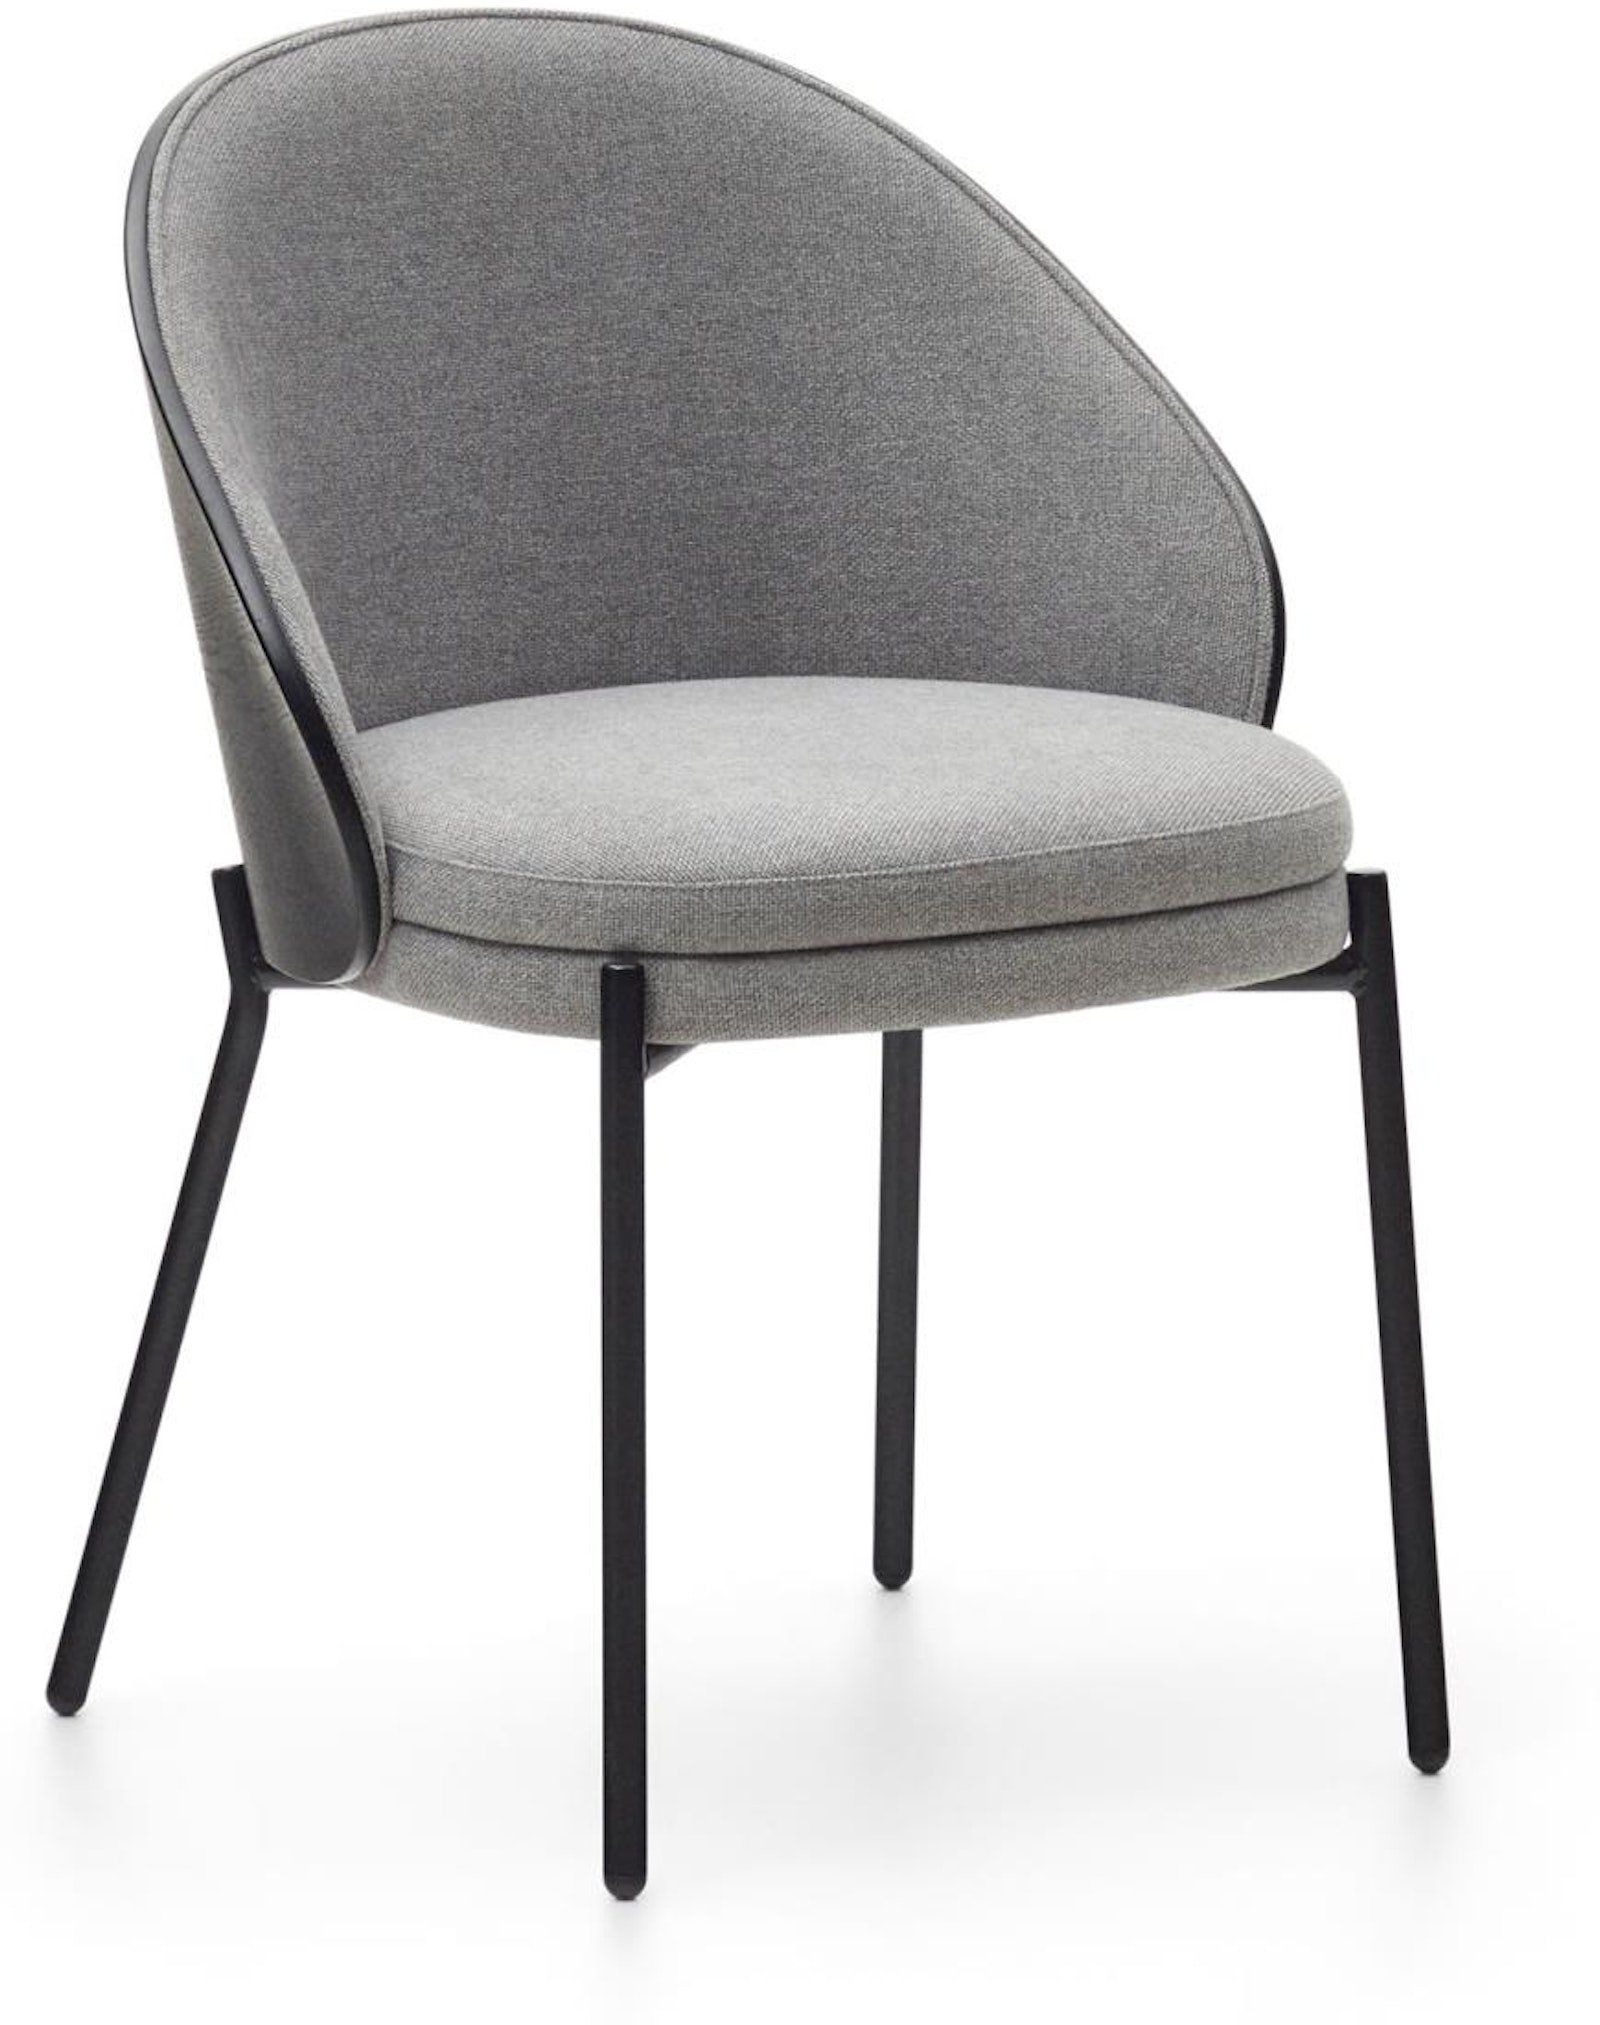 Eamy, Spisebordsstole, moderne, nordisk, rustik, stof by Laforma (H: 75 cm. x B: 55 cm. x L: 53 cm., Sort)